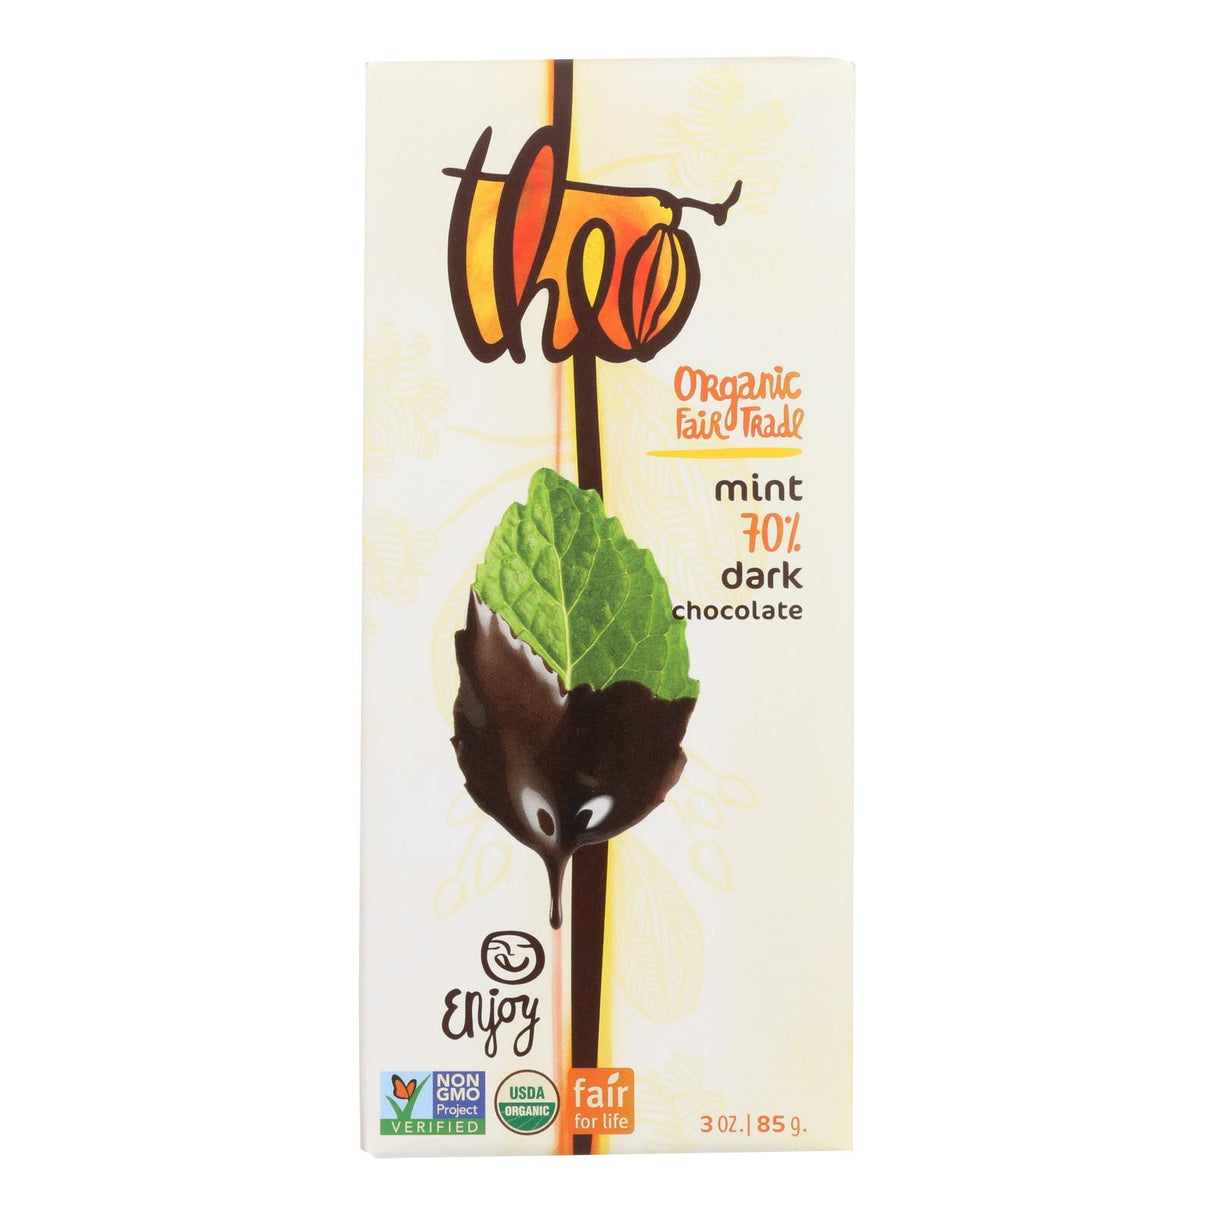 Theo Chocolate Organic Chocolate Bar - Classic - Dark Chocolate - 70 Percent Cacao - Mint - 3 Oz Bars - Case Of 12